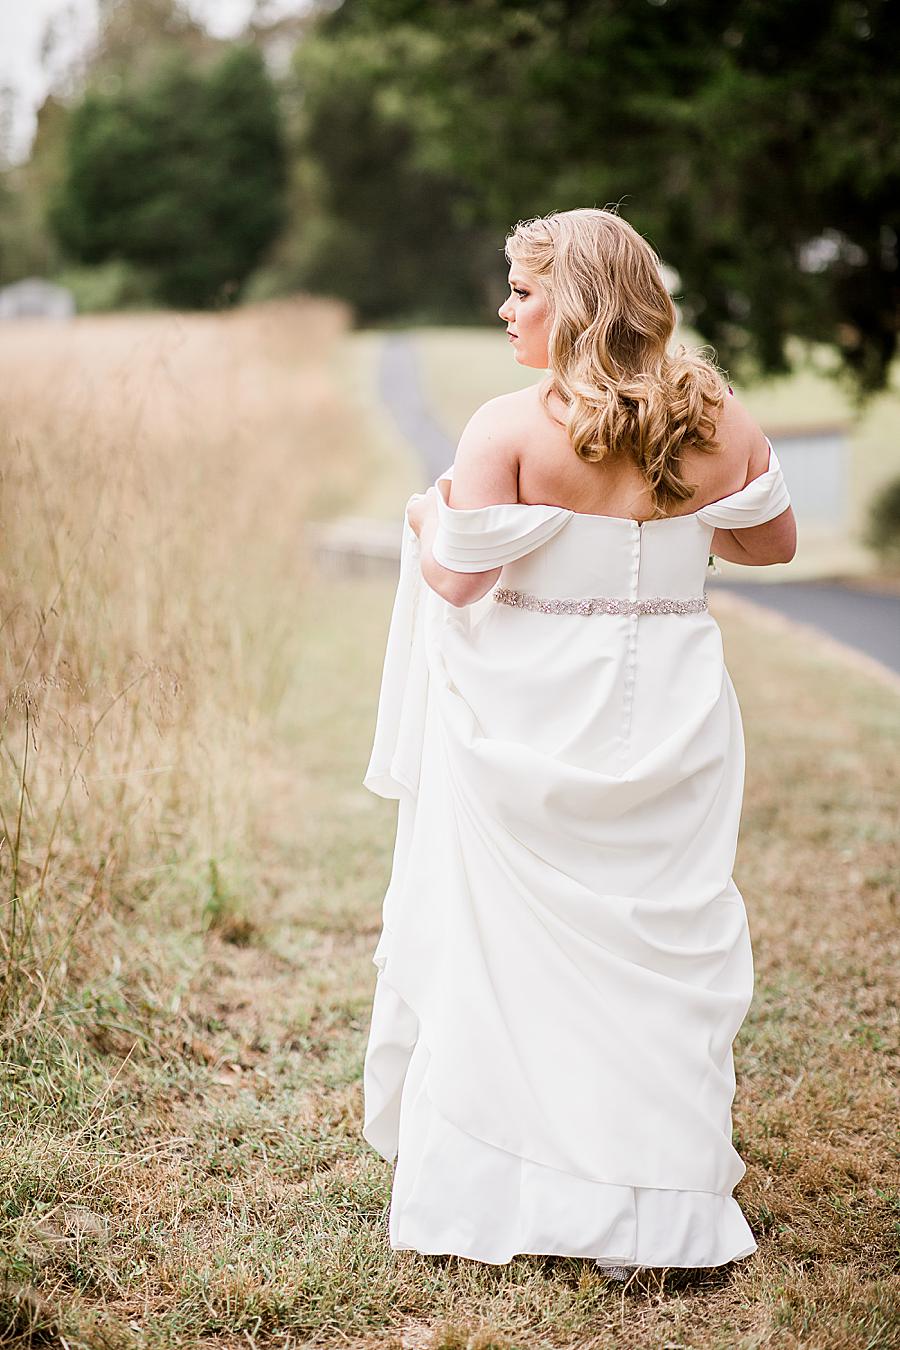 Drop shoulder wedding dress at this Pine Ridge Baptist Church wedding by Knoxville Wedding Photographer, Amanda May Photos.